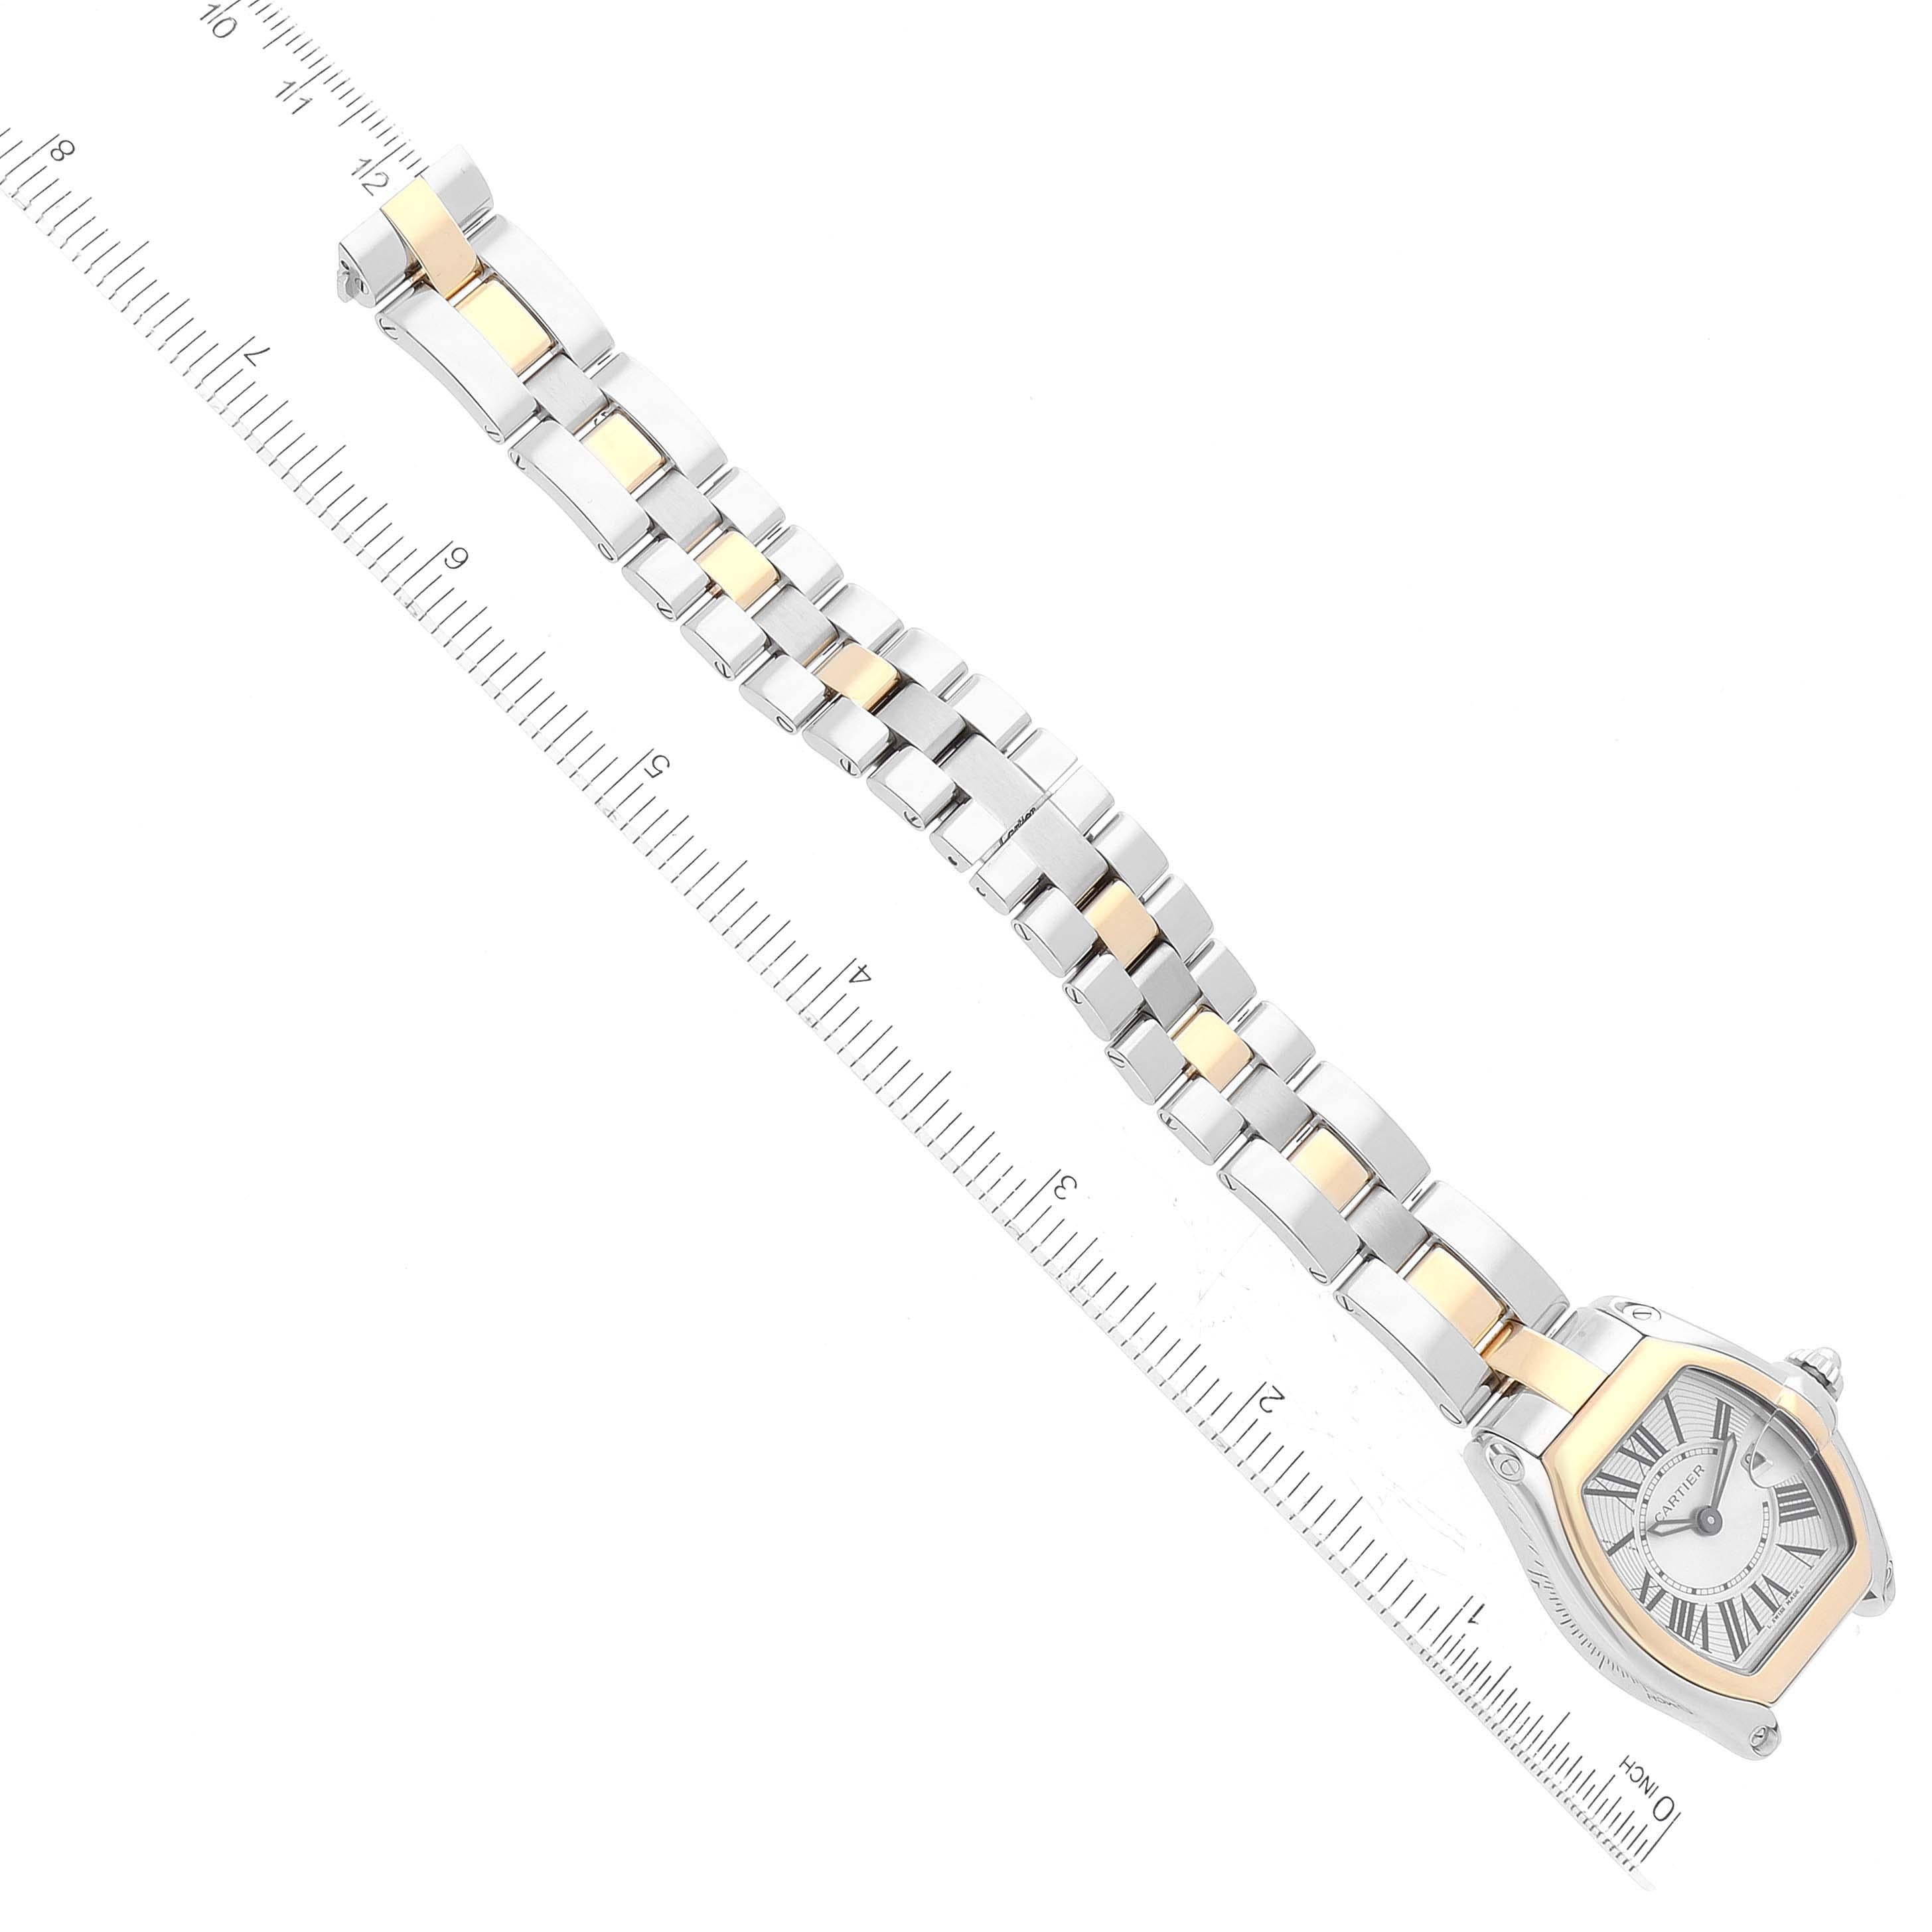 Cartier Roadster Steel Yellow Gold Ladies Watch W62026Y4 4